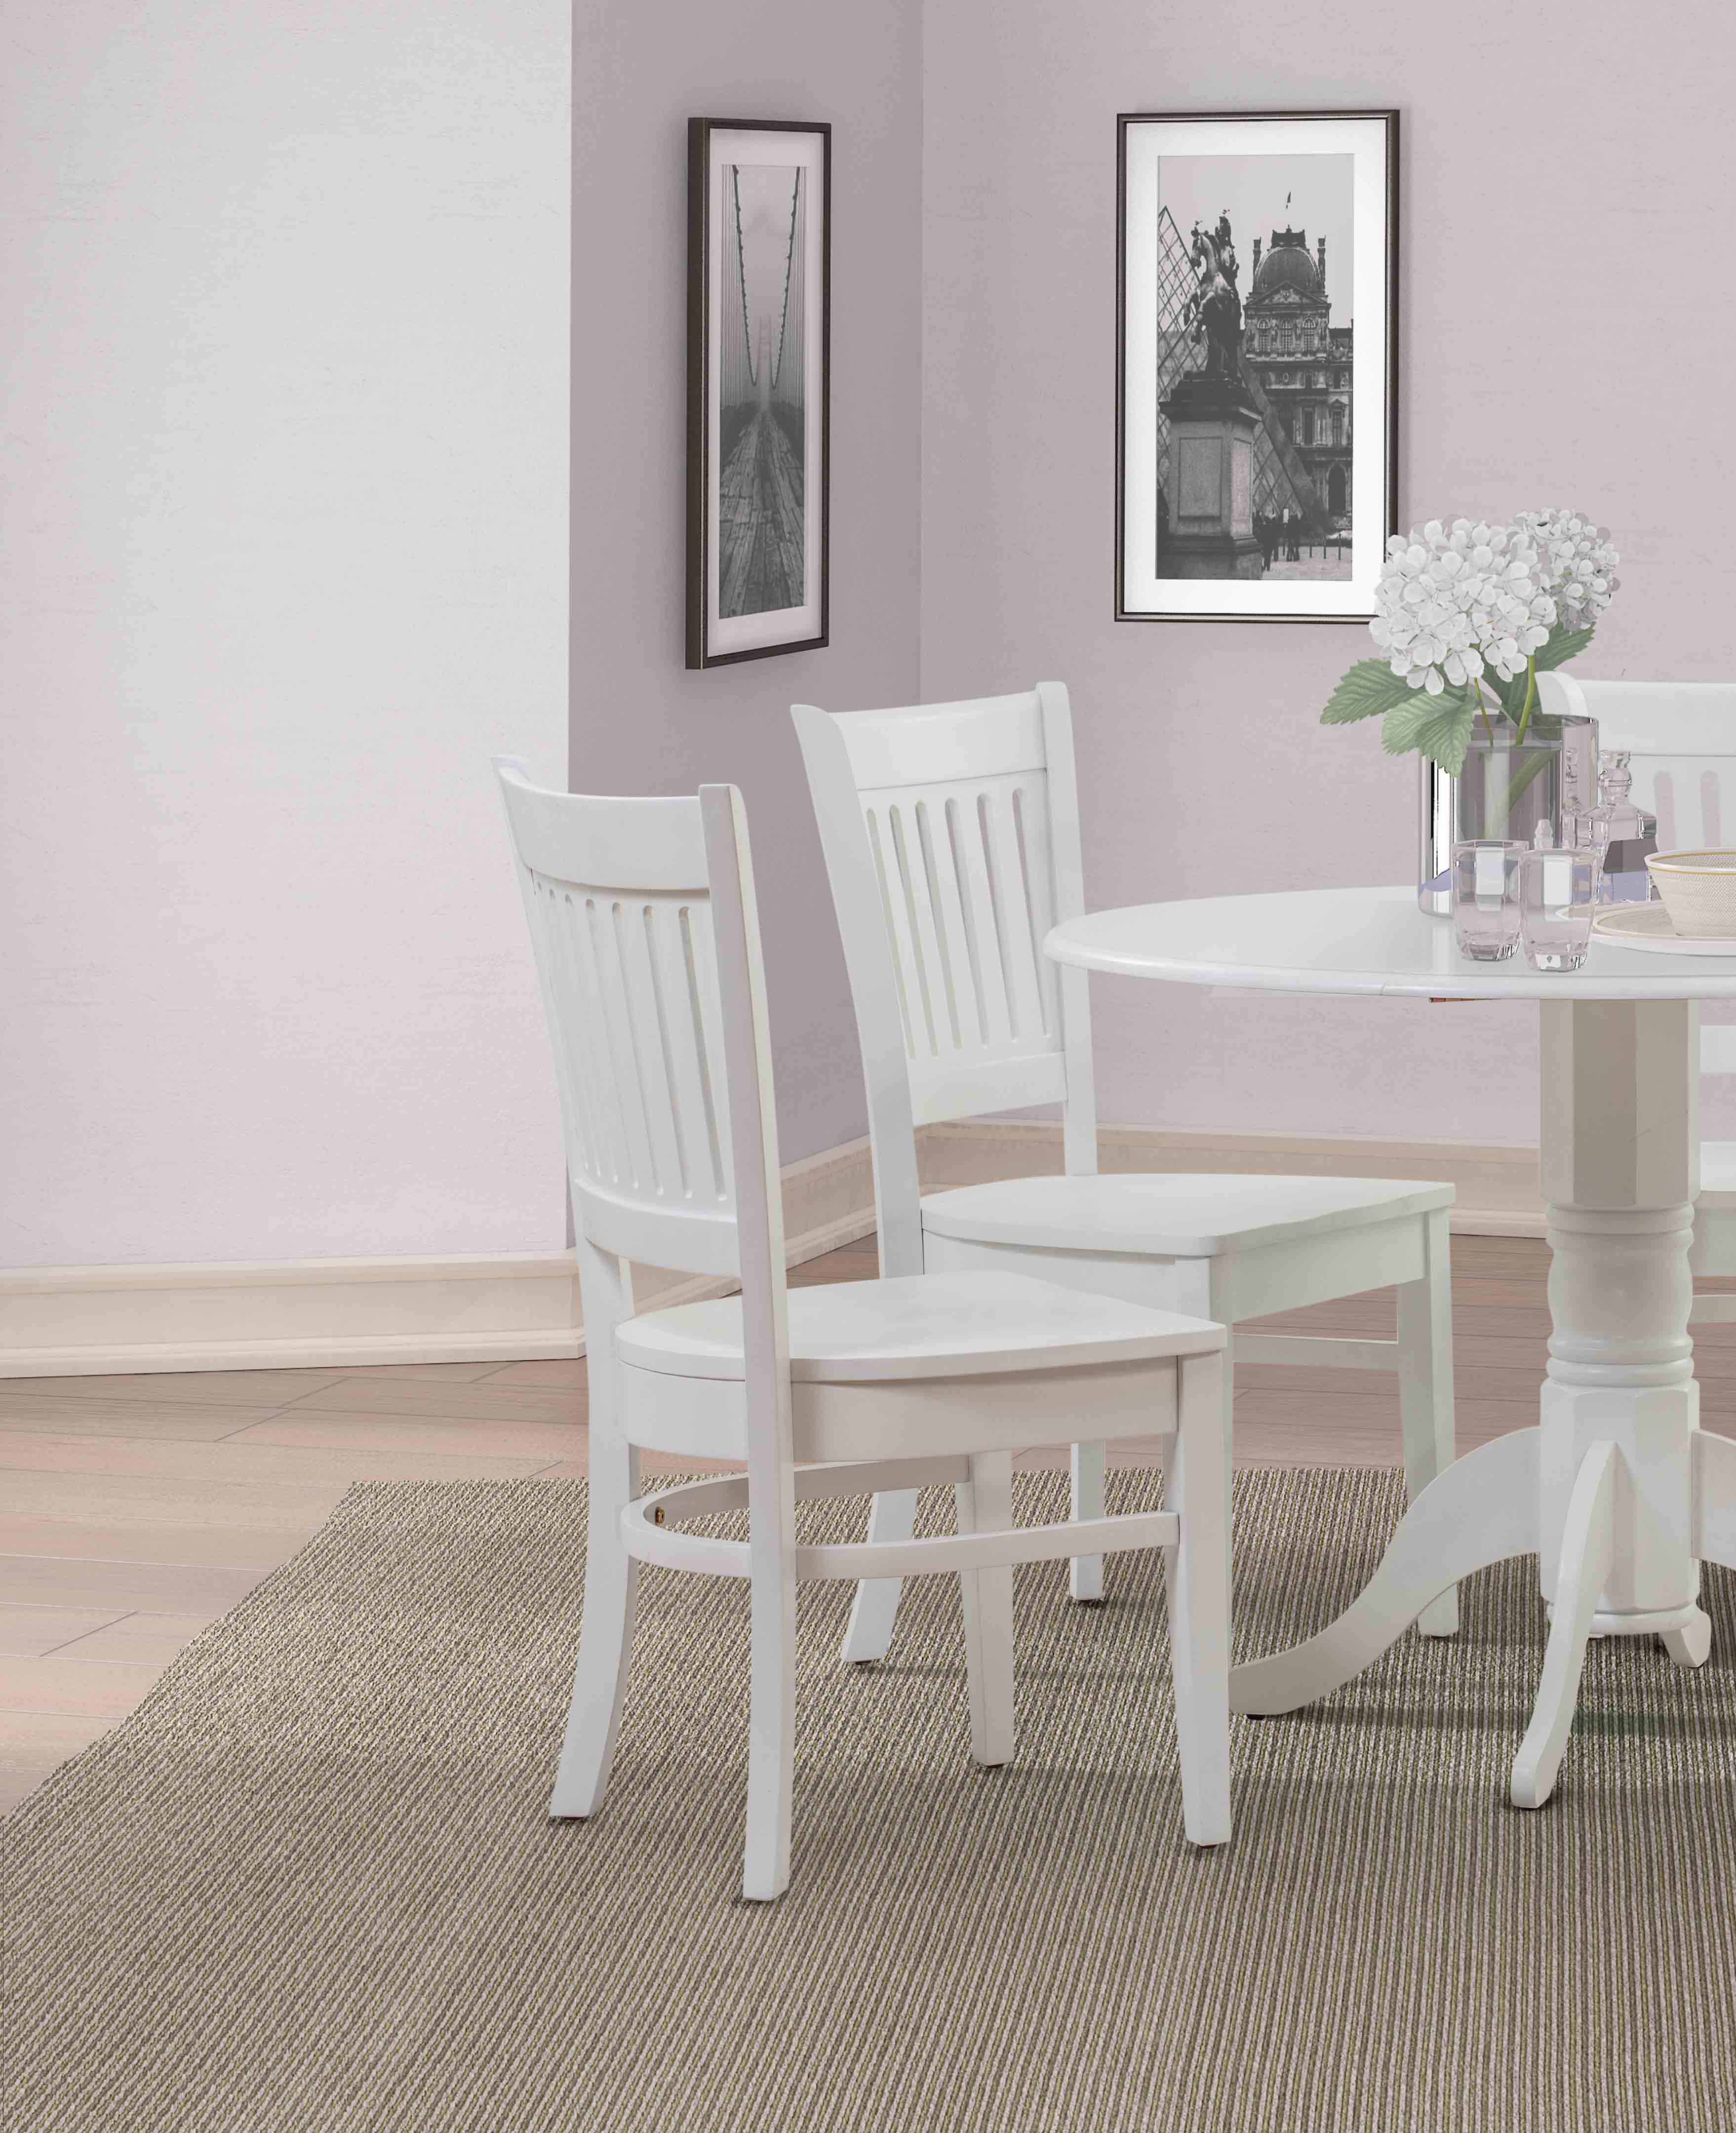 Alcott Hill Ervine Solid Wood Dining Chair Reviews Wayfair